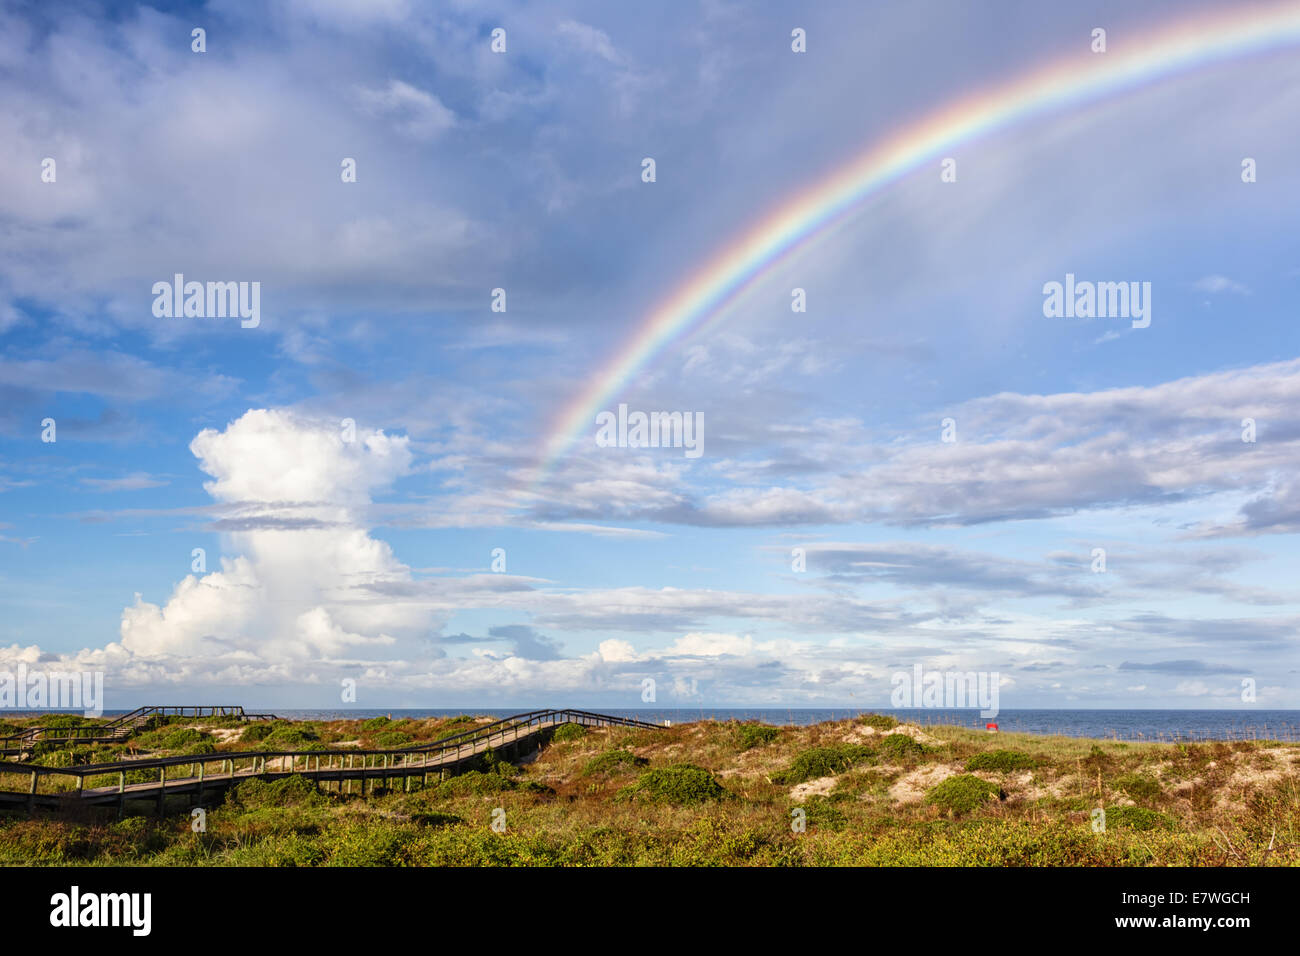 Bellissimo arcobaleno su soleggiati bellissime dune di sabbia in spiaggia, Amelia Island, Florida. Foto Stock